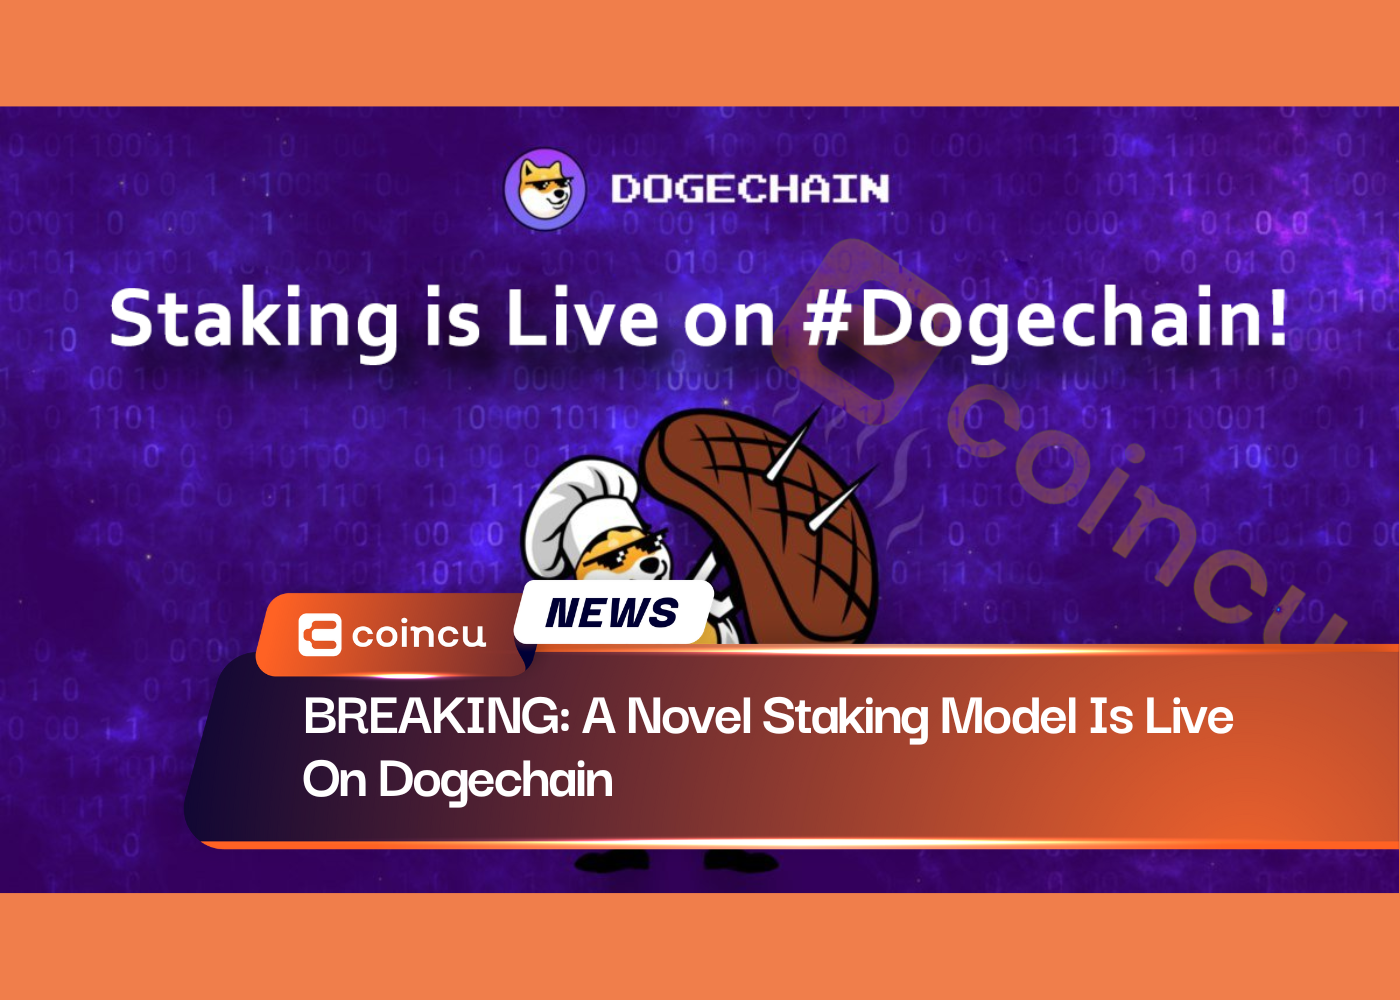 BREAKING: A Novel Staking Model Is Live On Dogechain